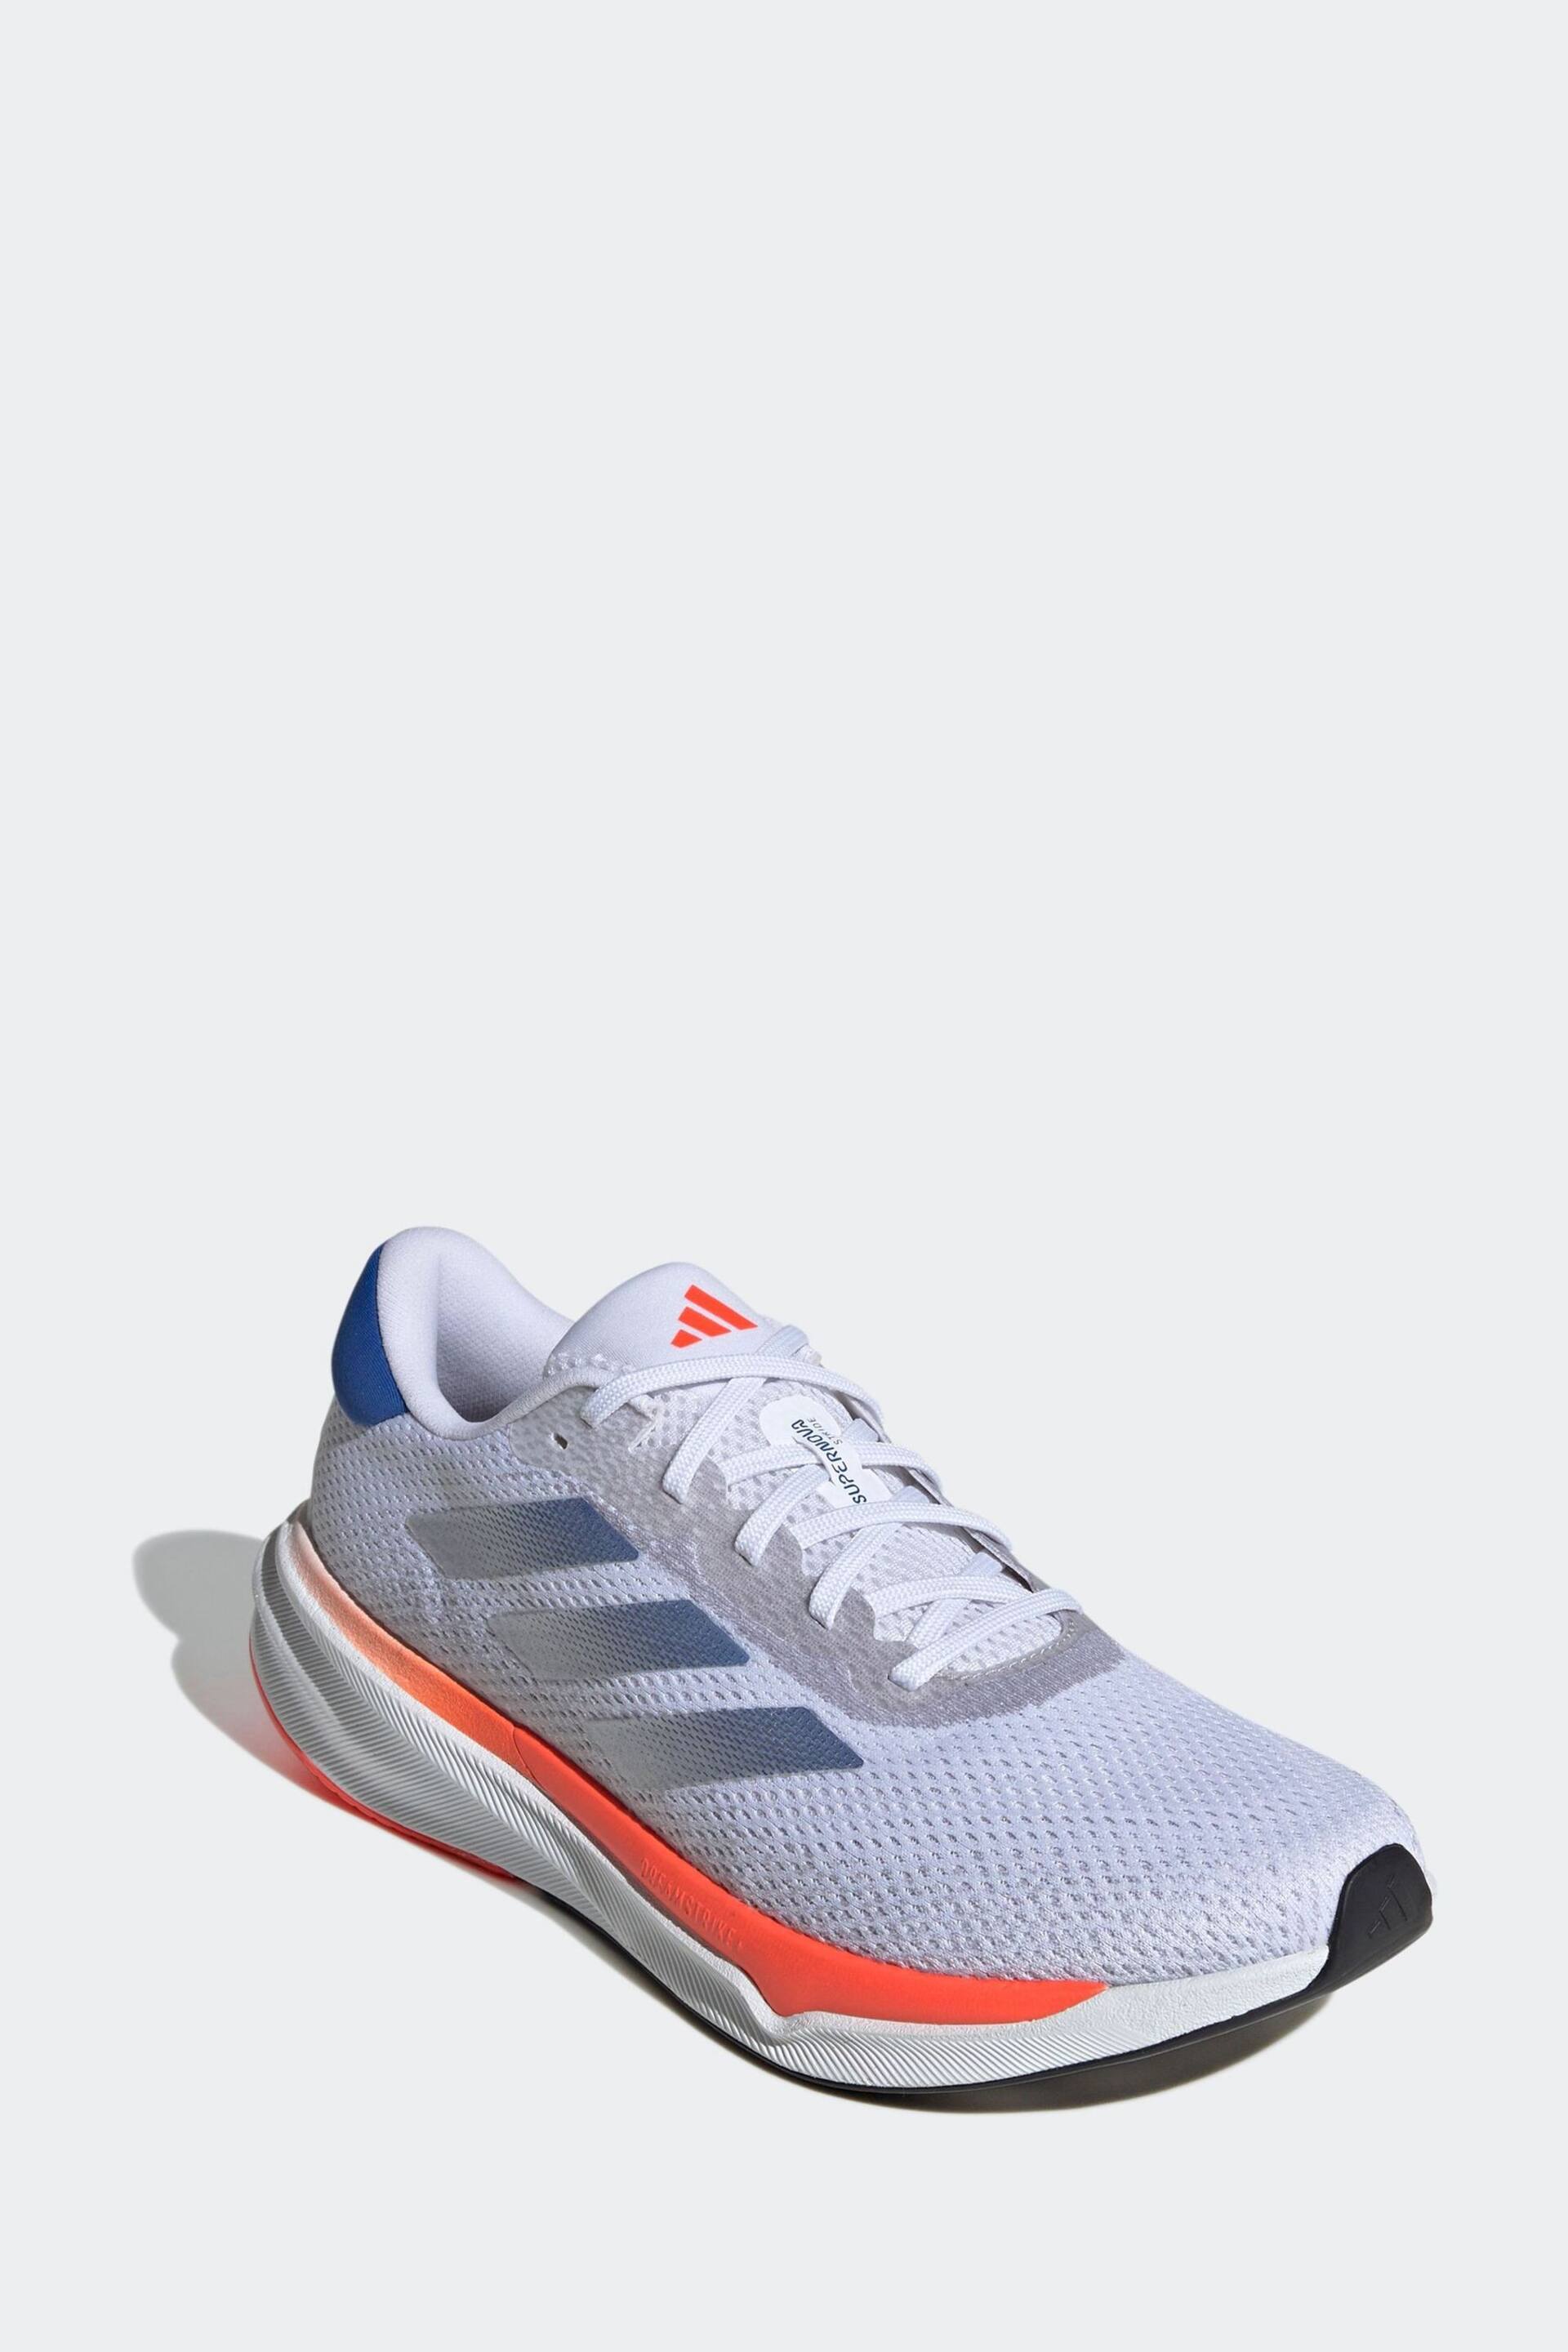 adidas White Supernova Stride Trainers - Image 4 of 9